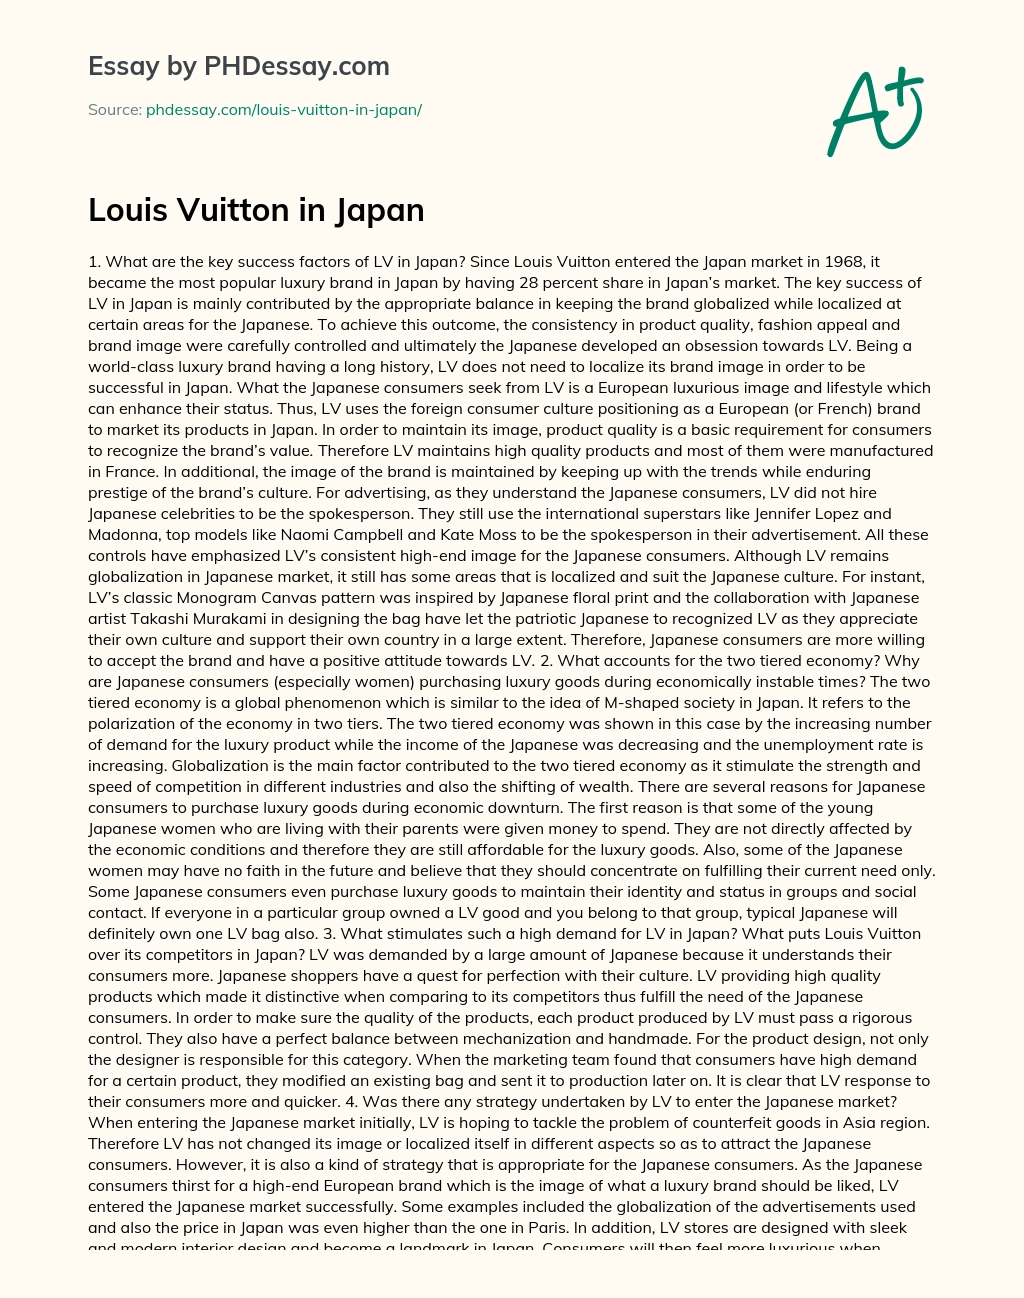 Louis Vuitton in Japan essay